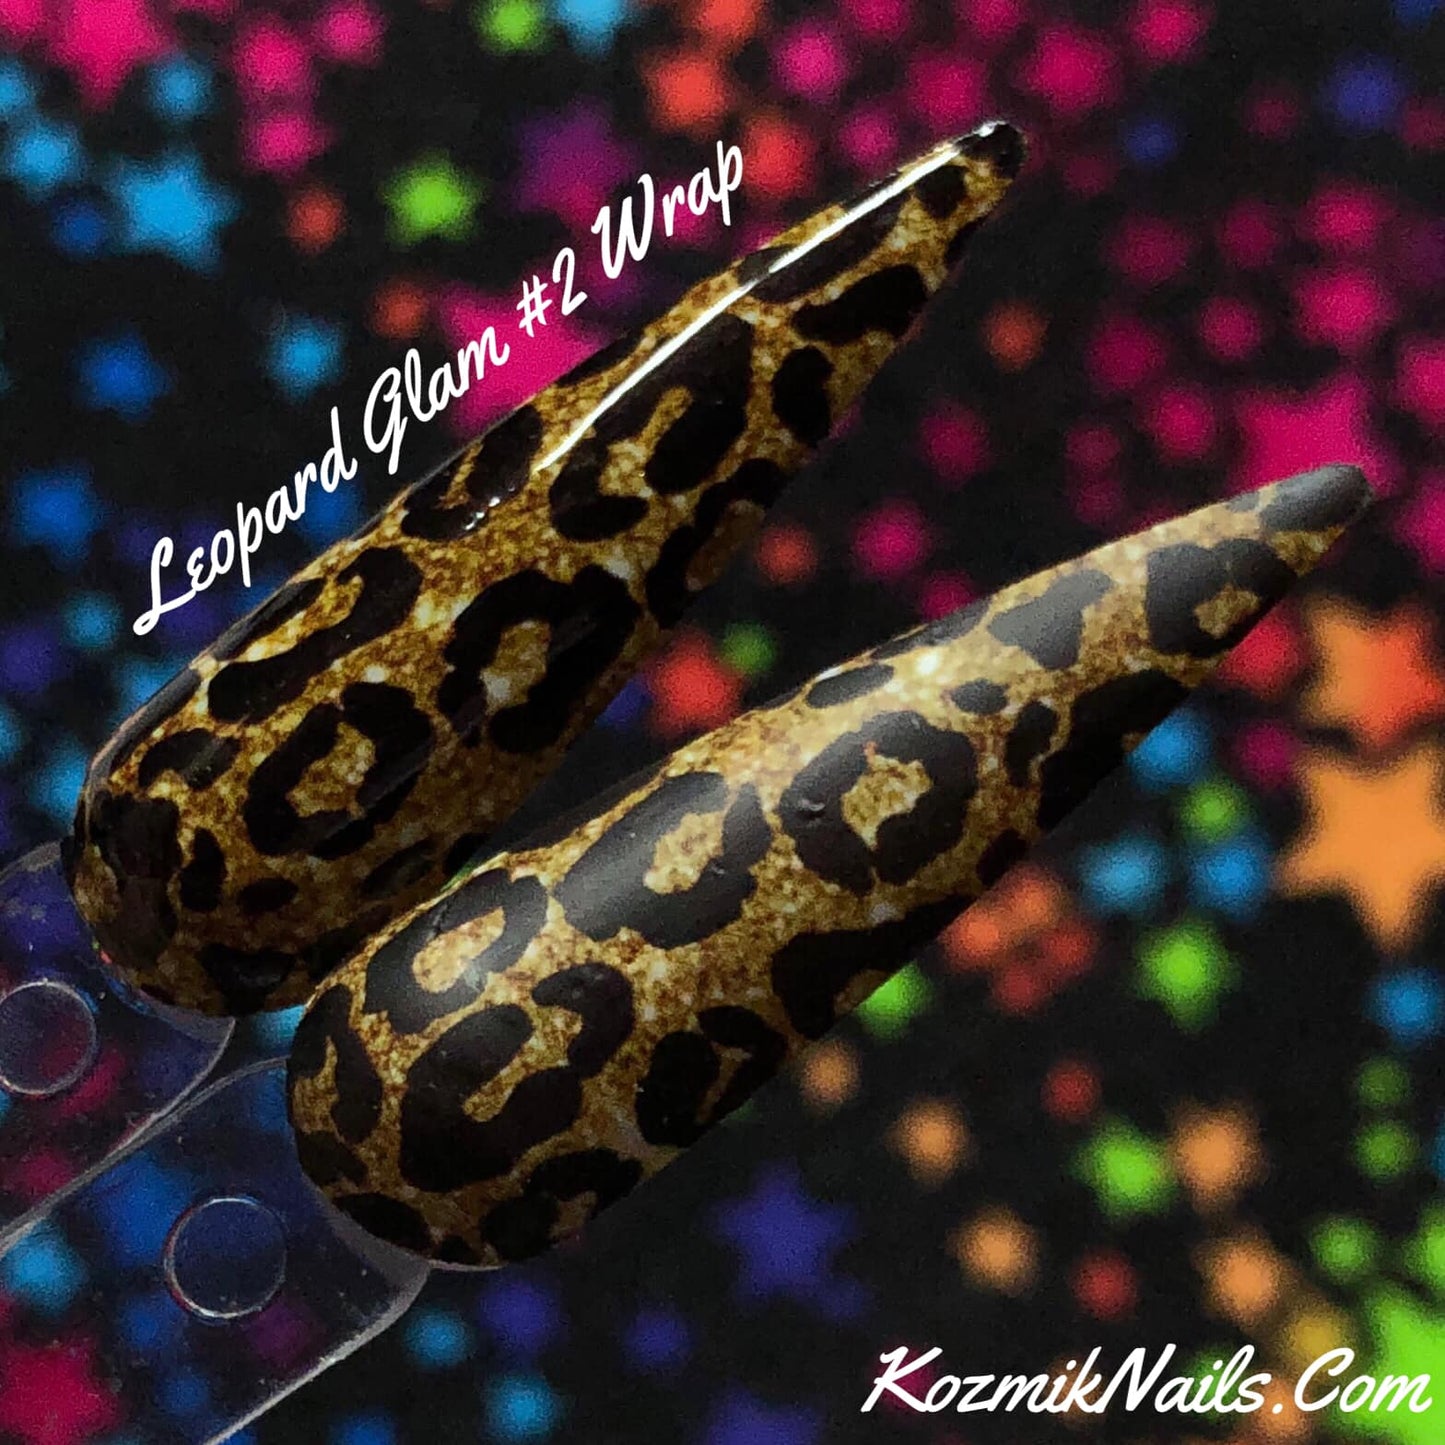 Leopard Glam #2